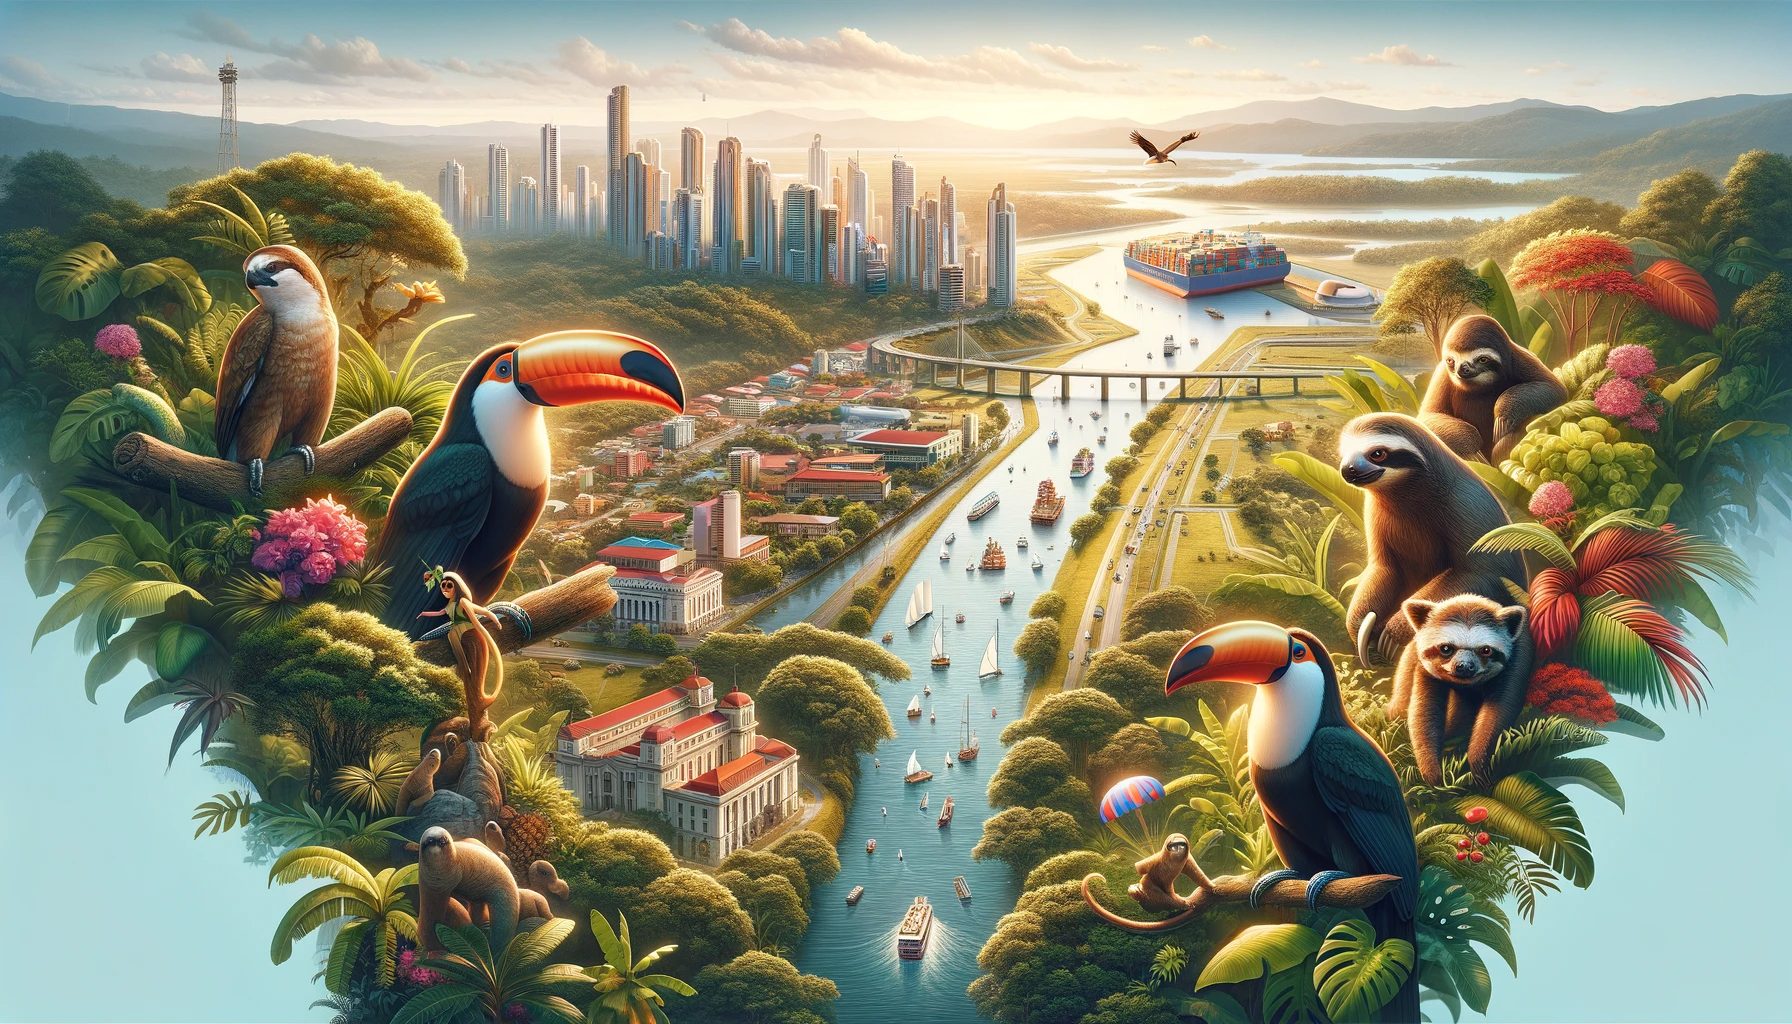 Vibrant cityscape, exotic wildlife, and lush nature illustration.